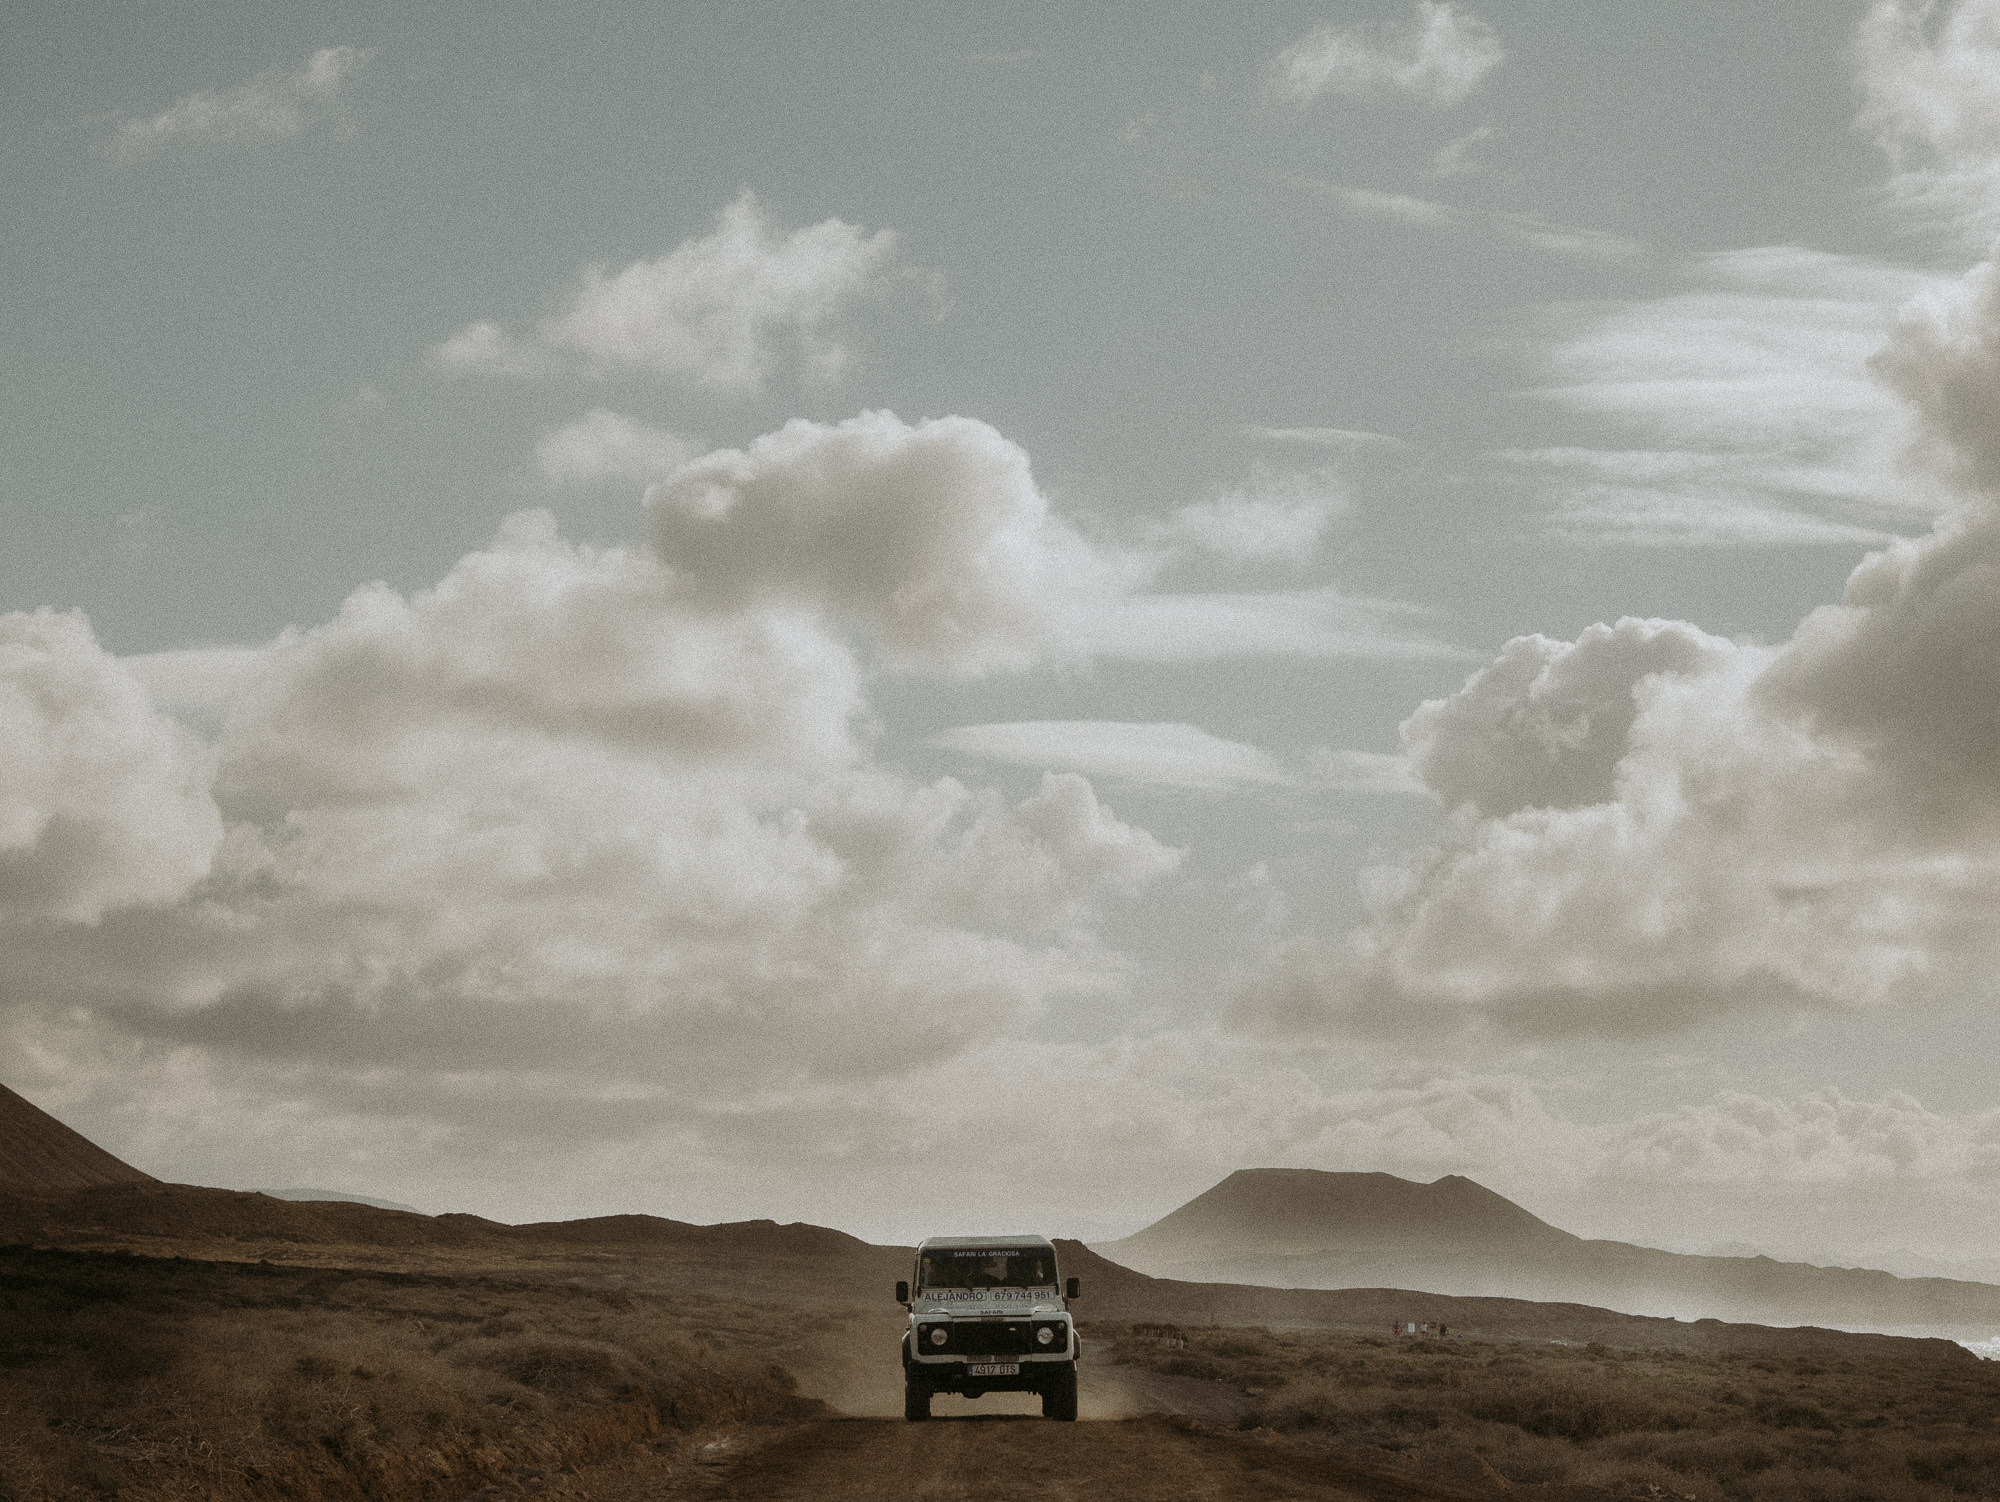 Land Rover Defender drives across desert road on the island of La Graciosa.